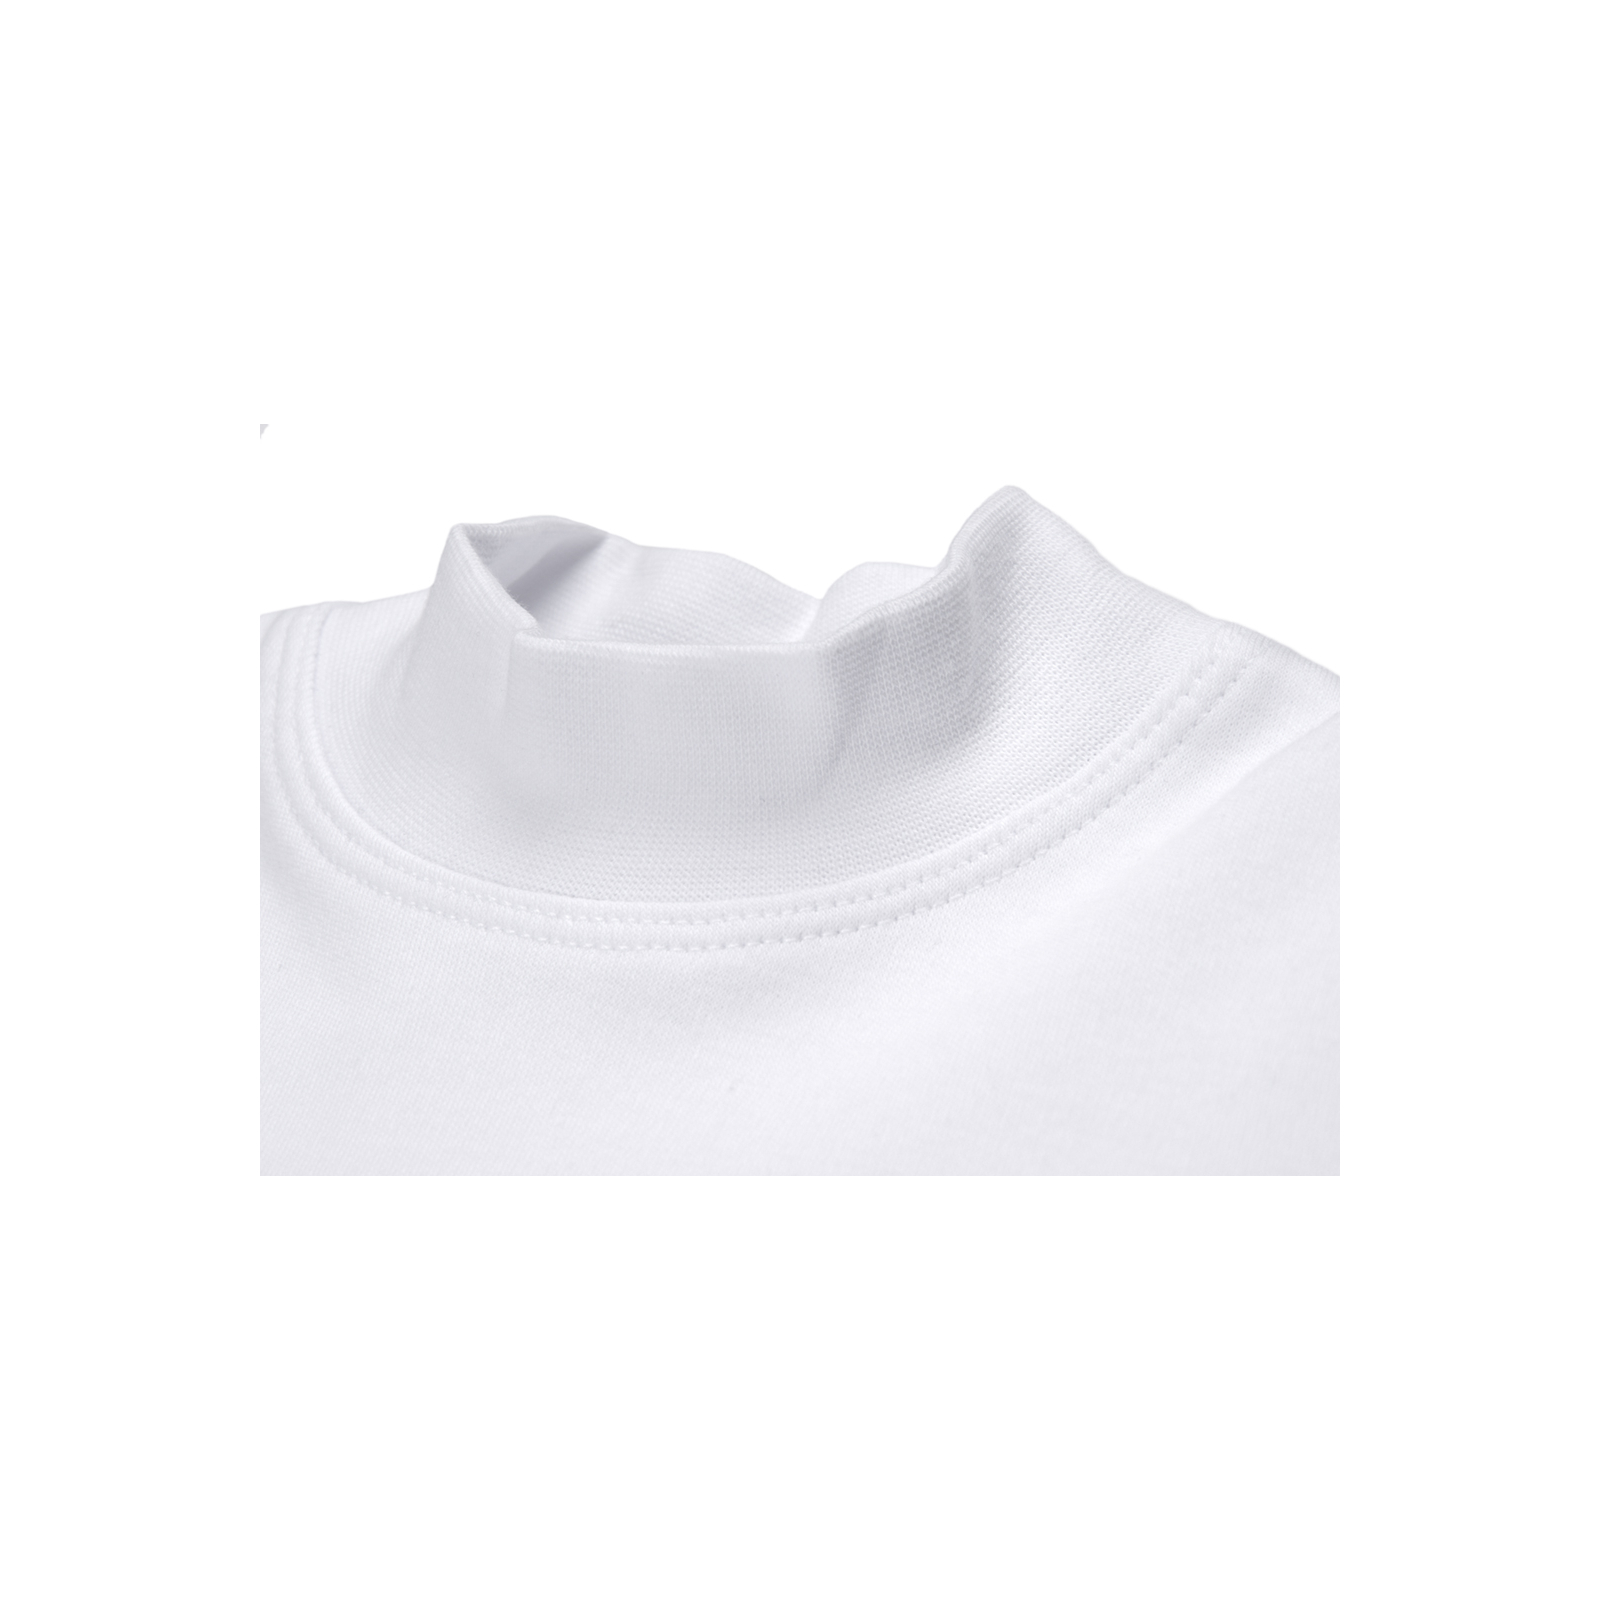 Кофта Lovetti водолазка белая (1011-98-white) изображение 3